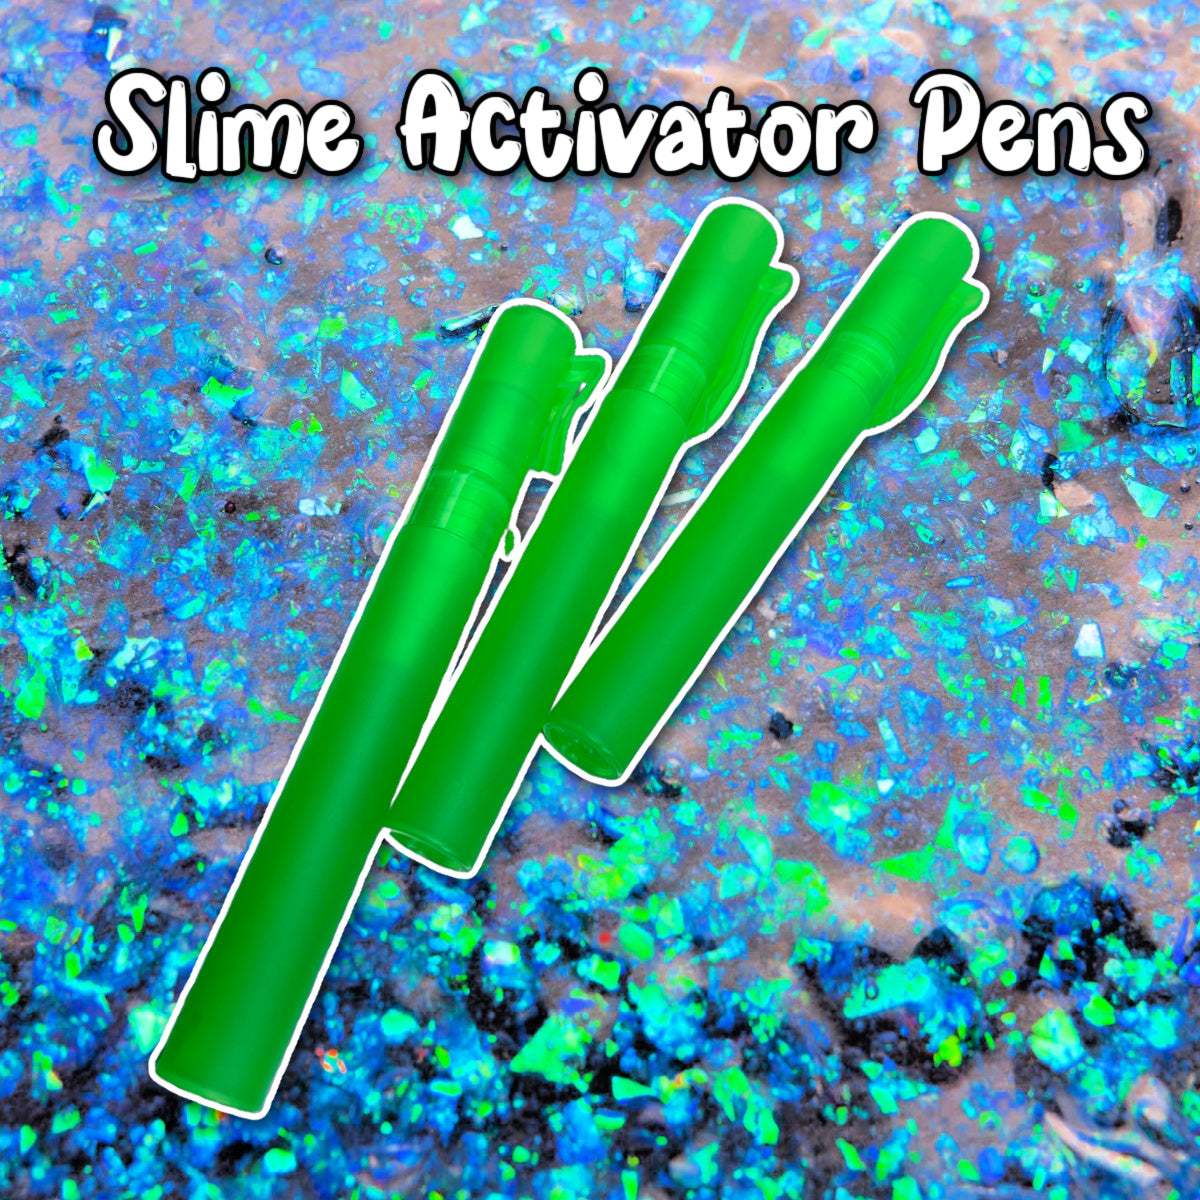 Slime Activator Pens (1PC) Keeps Slime Not Melted!